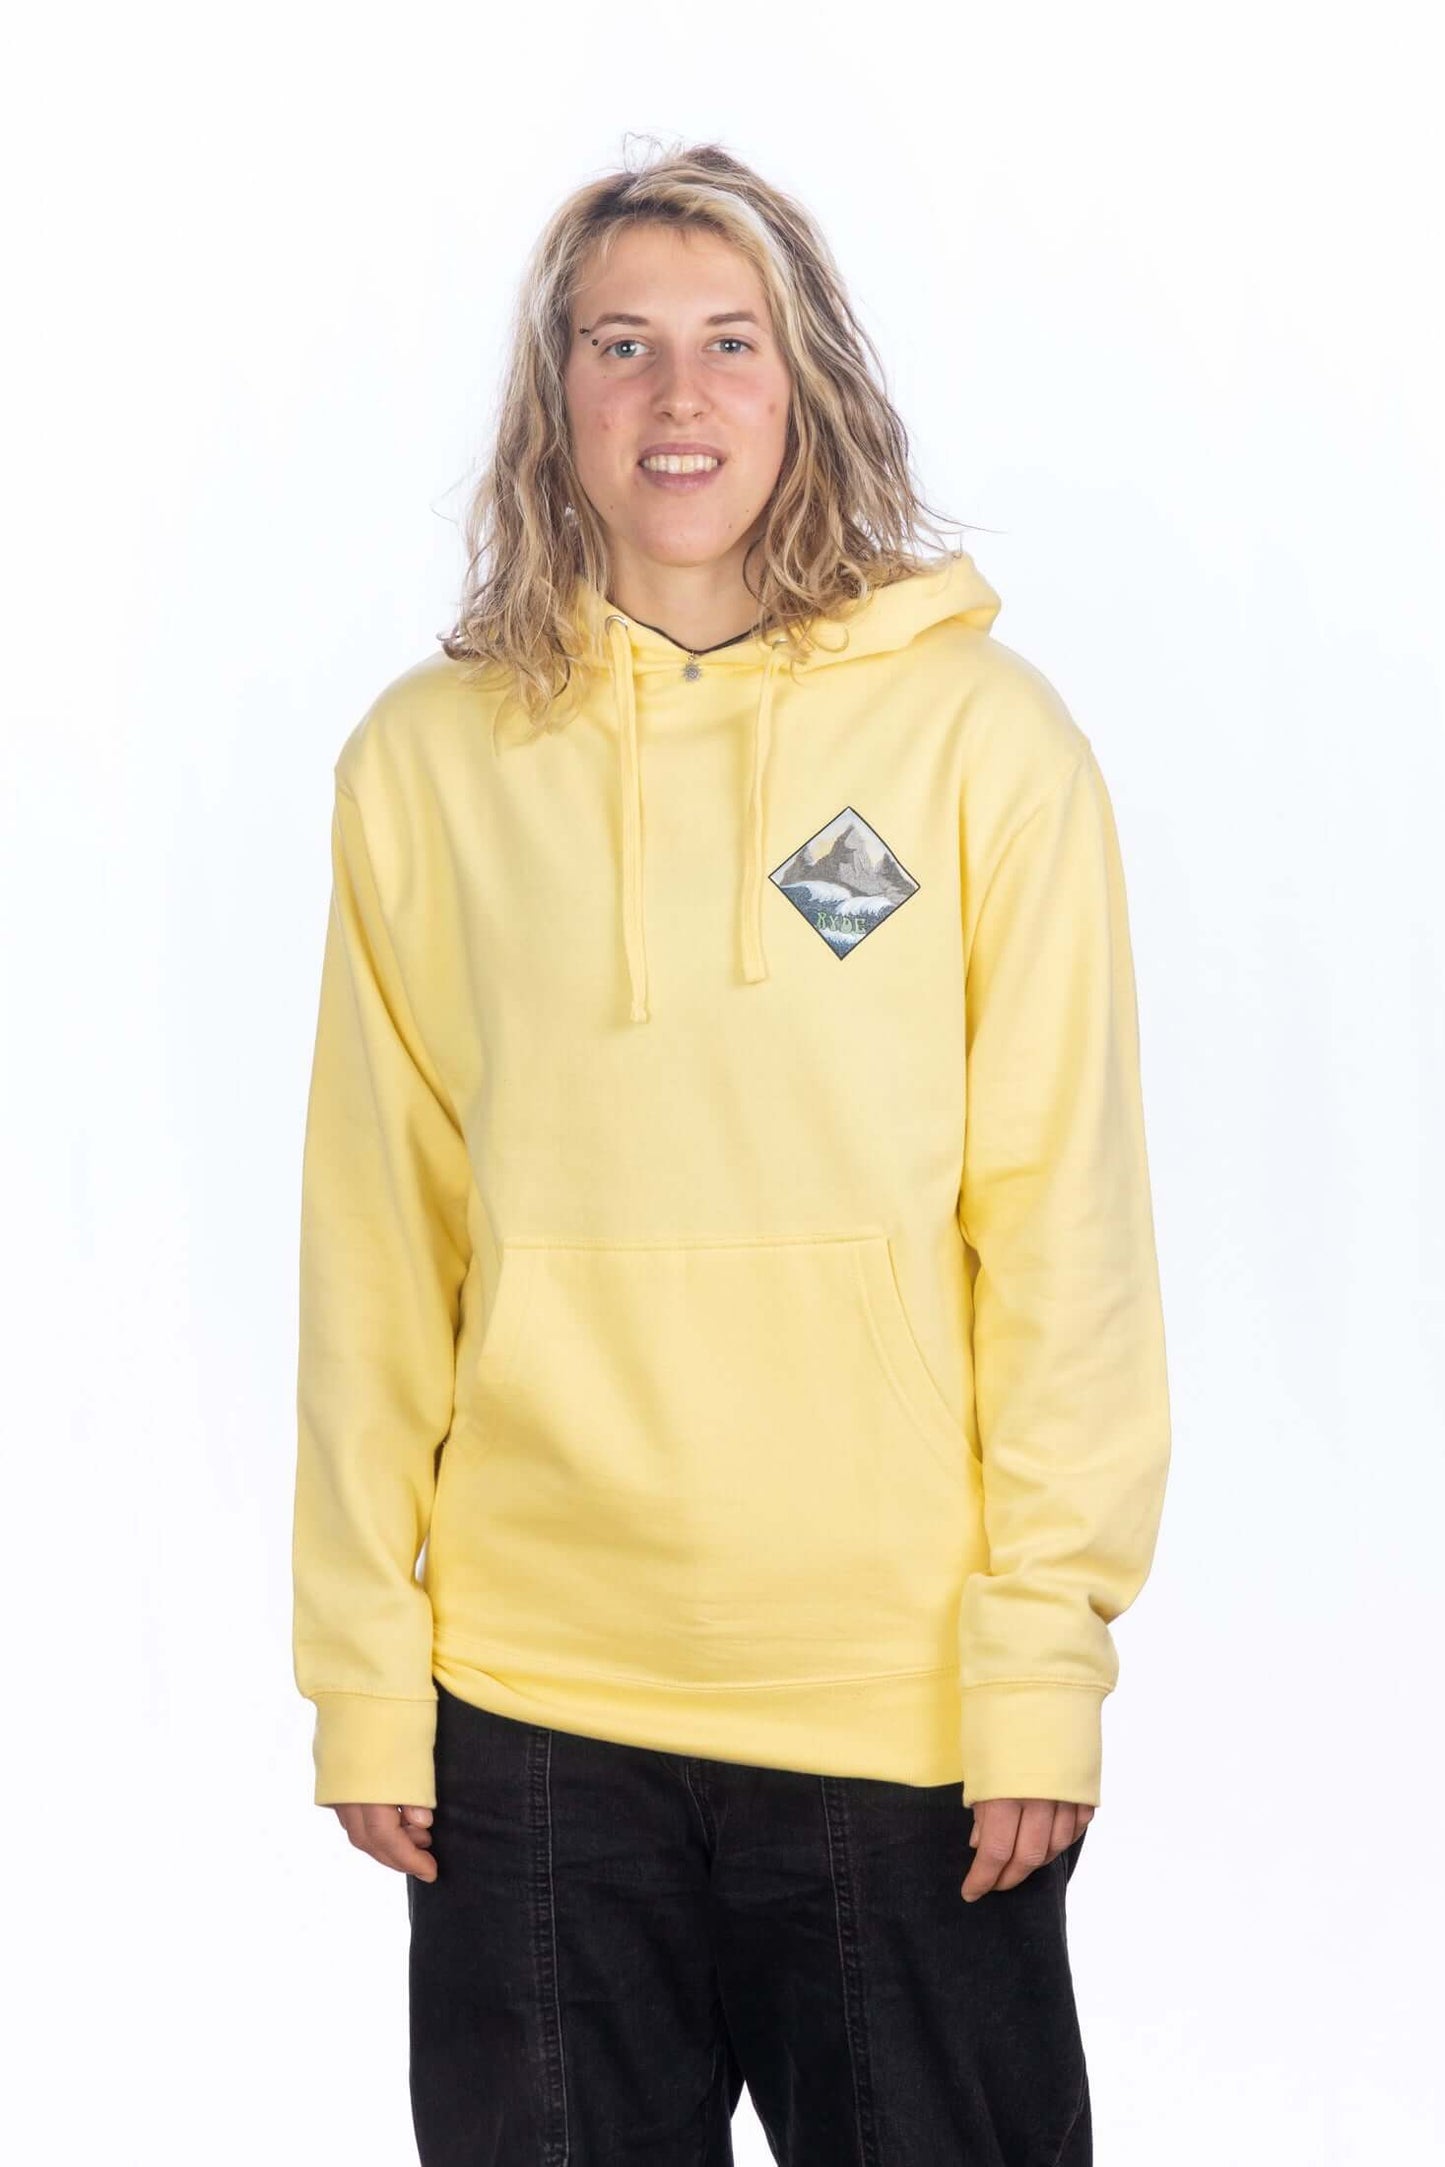 ryde 4 lyfe - Free Flow Hooded Sweatshirt - yellow - front